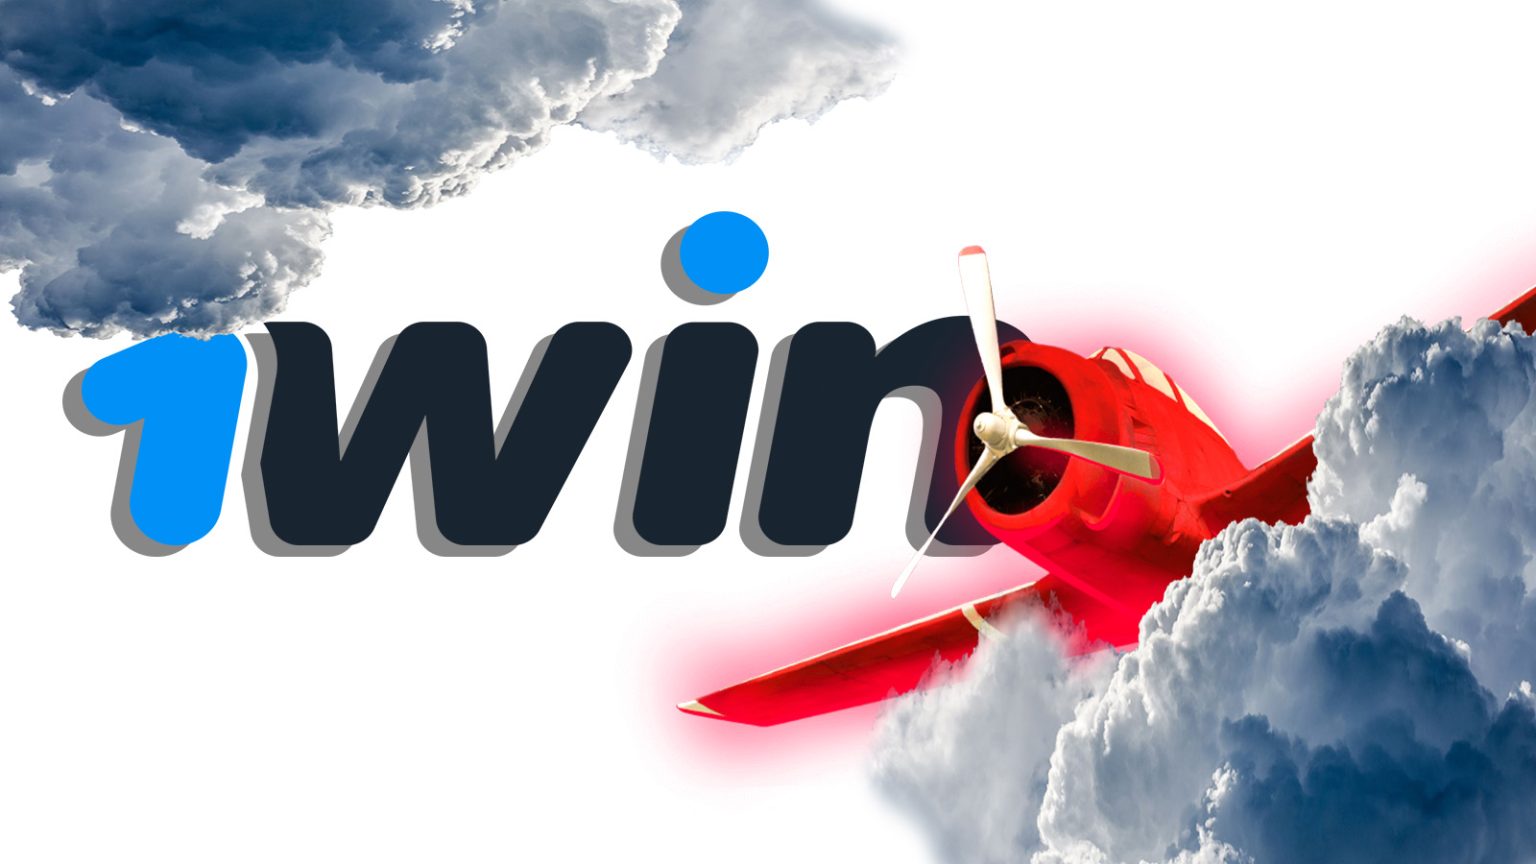 Aviator 1Win: How to Play Aviator Online Game